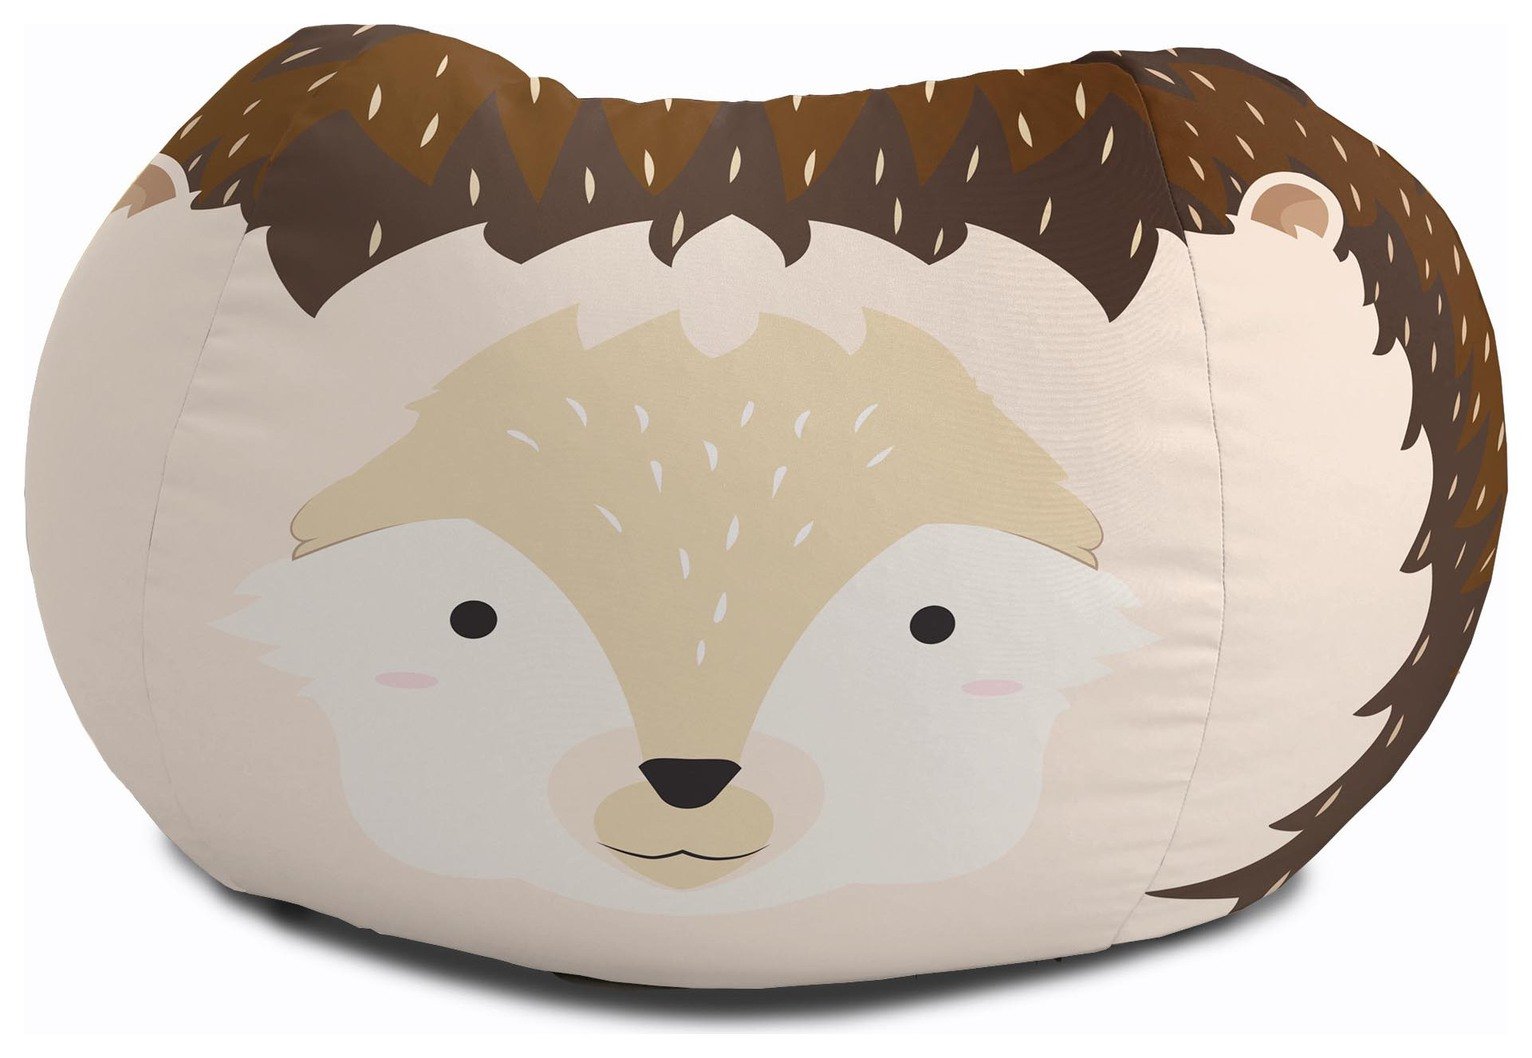 rucomfy Hedgehog Animal Bean Bag Medium Round